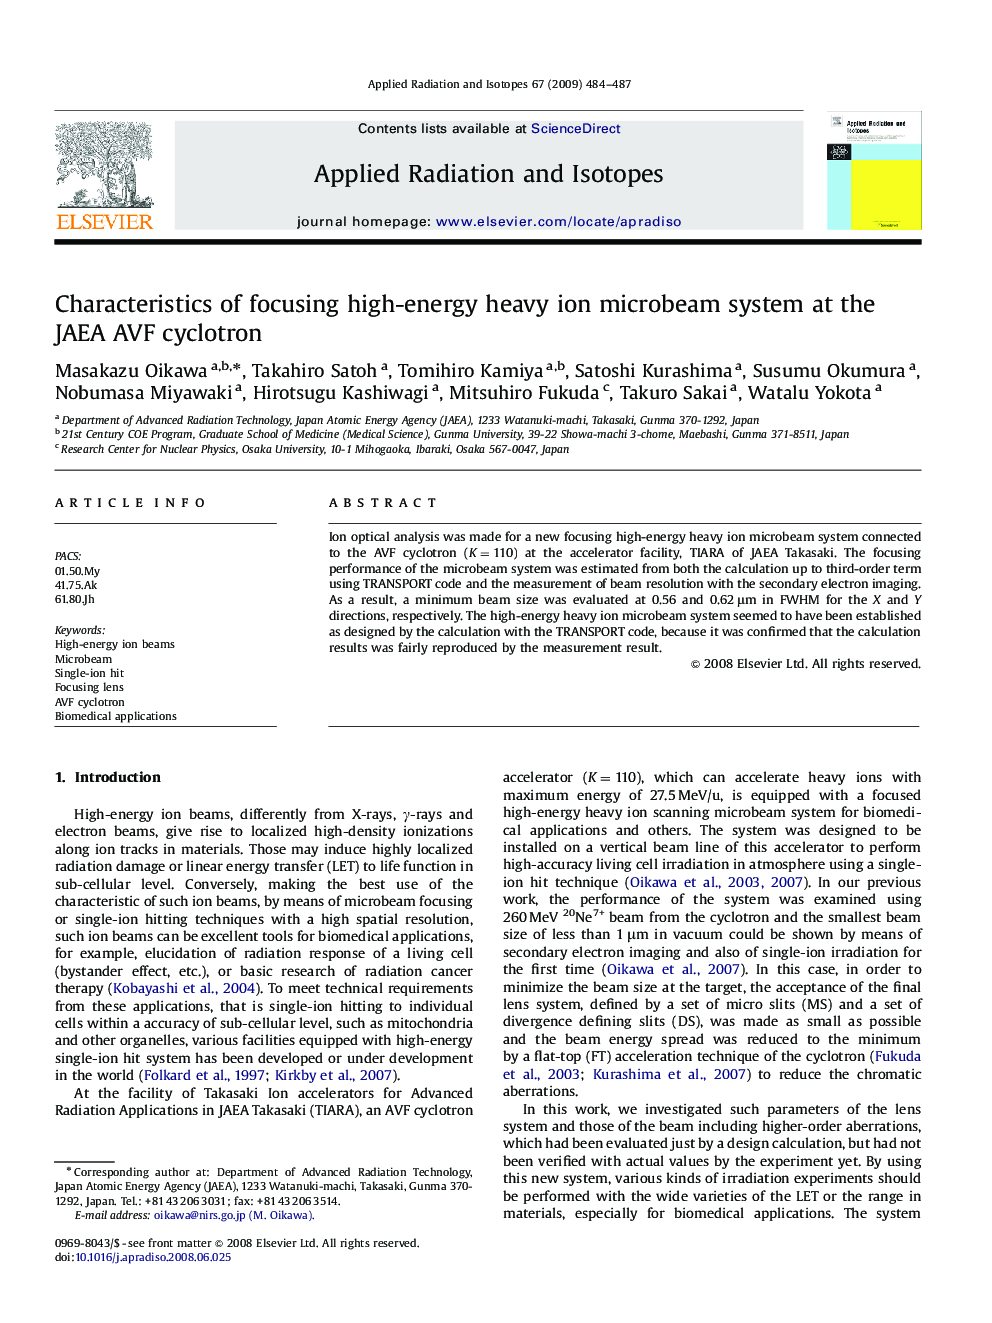 Characteristics of focusing high-energy heavy ion microbeam system at the JAEA AVF cyclotron